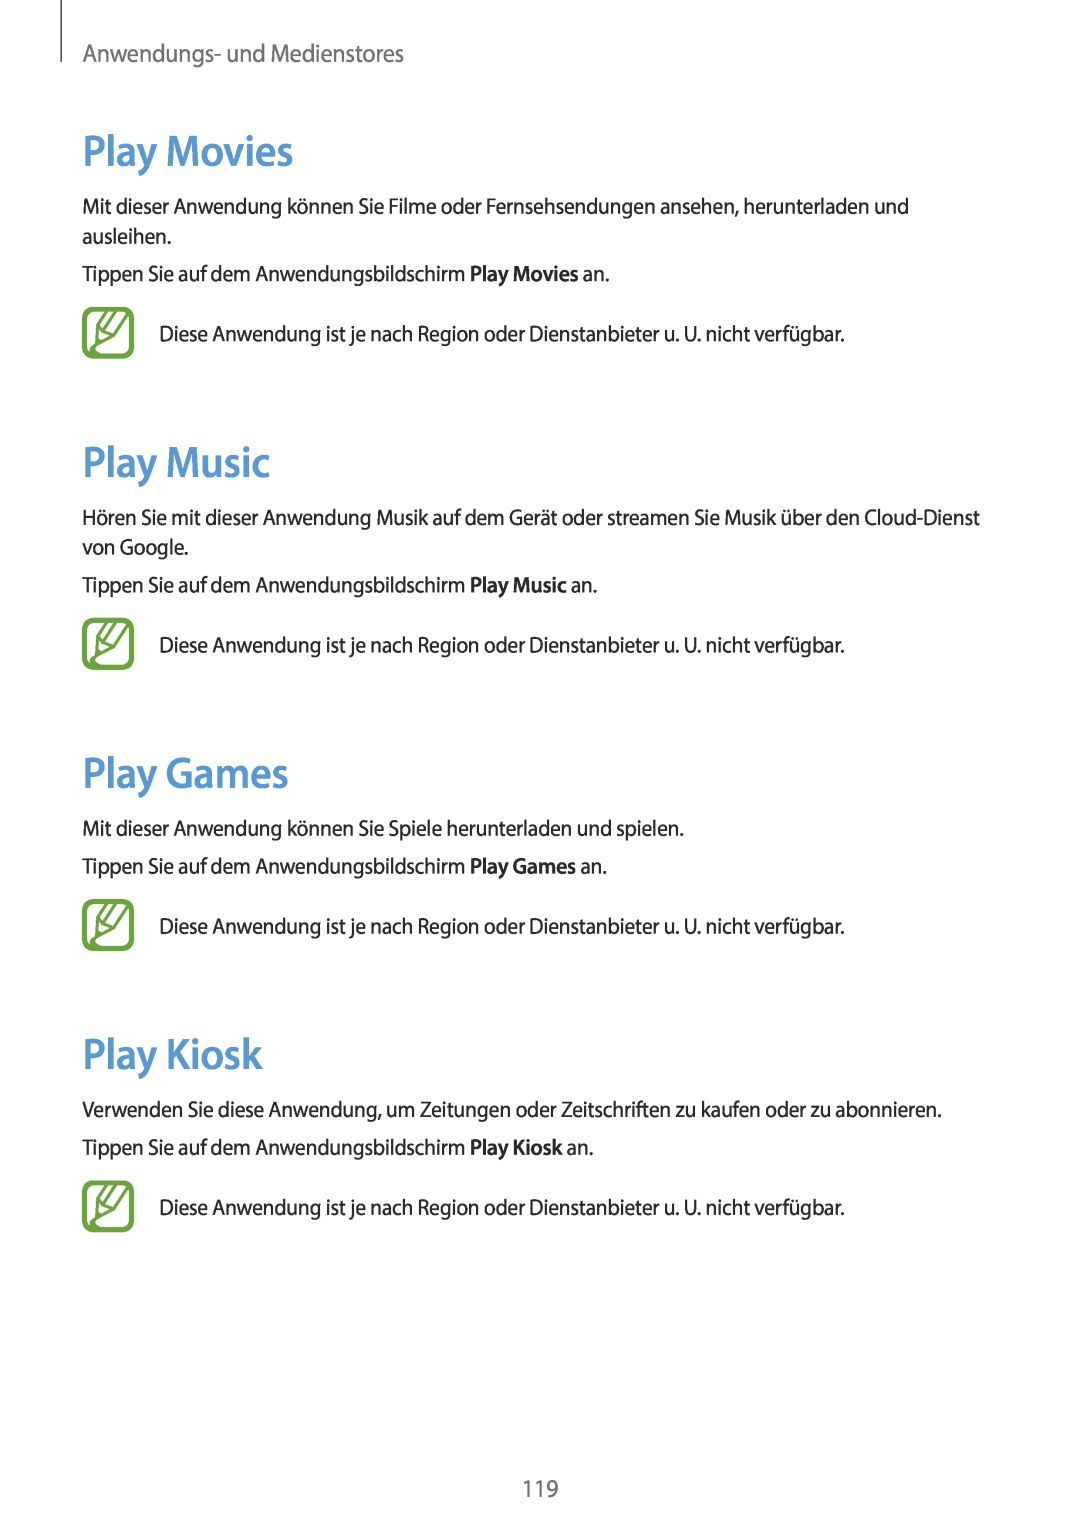 Samsung SM-C1010ZKADBT, SM-C1010ZWAEUR manual Play Movies, Play Music, Play Games, Play Kiosk, Anwendungs- und Medienstores 